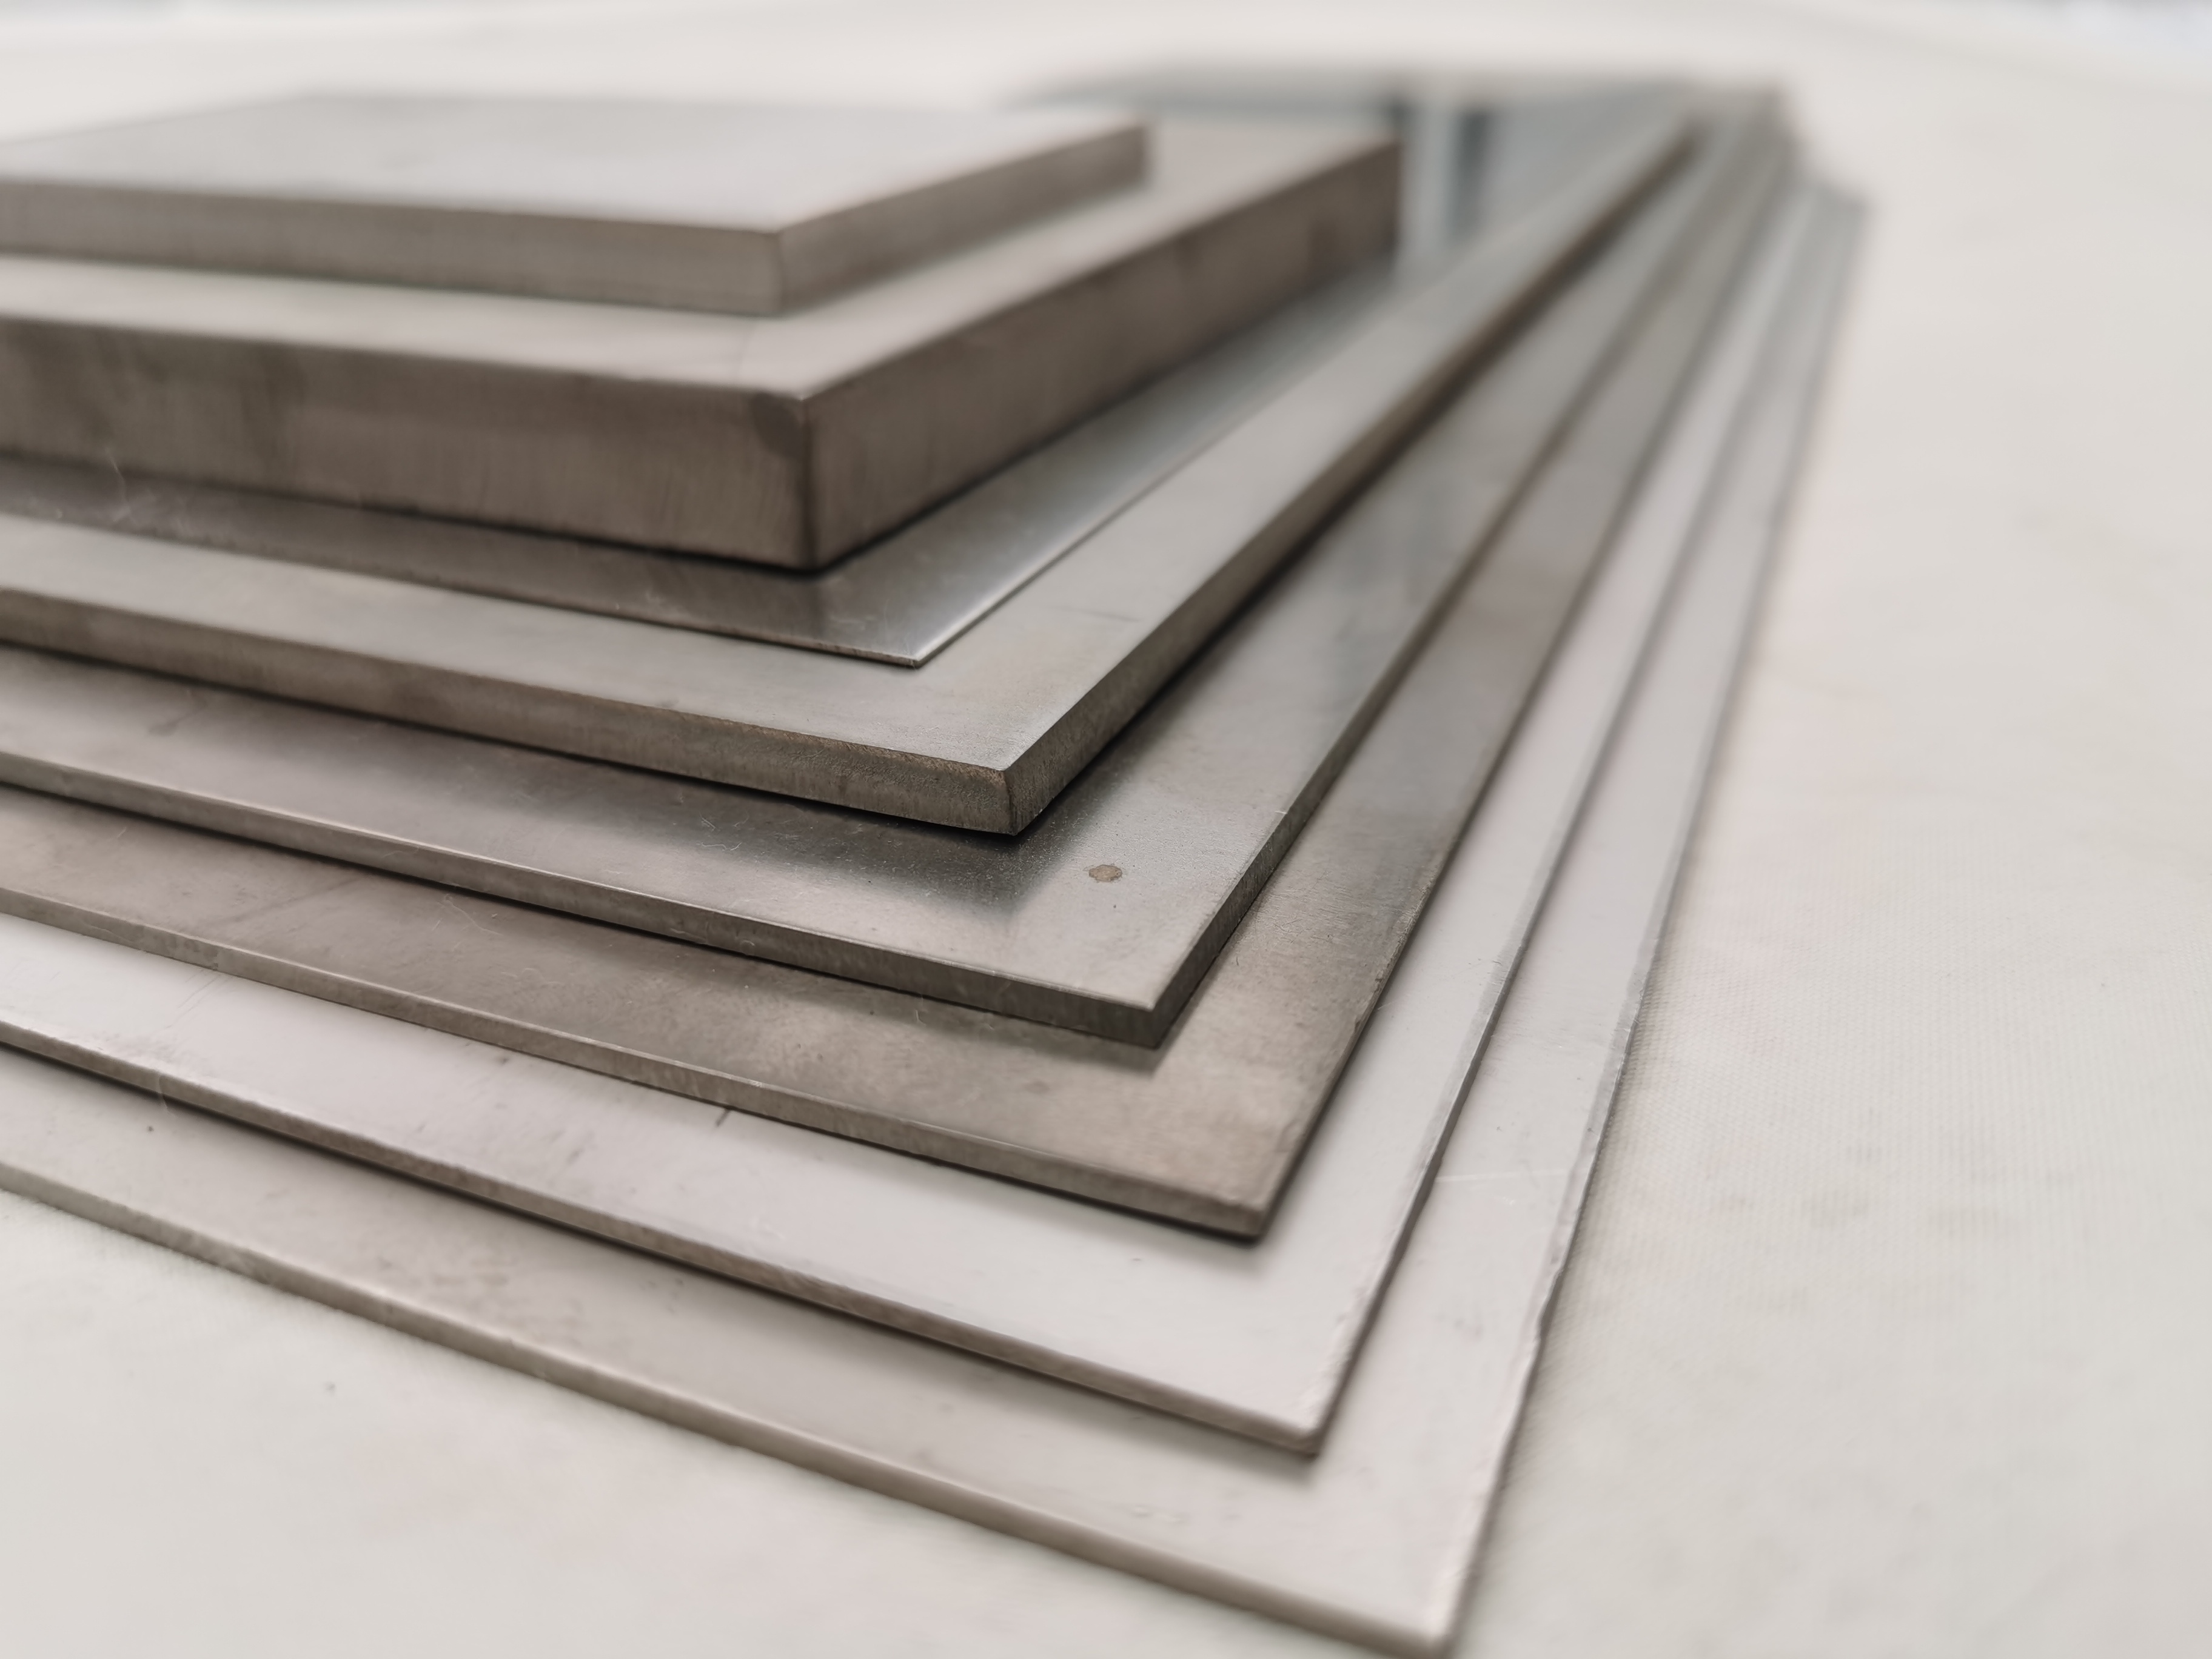 4pcs Gr2 Titanium Alloy Plate Ti Sheet 1*100*100mm 6al-4v For DIY OEM Metalworking Supplies